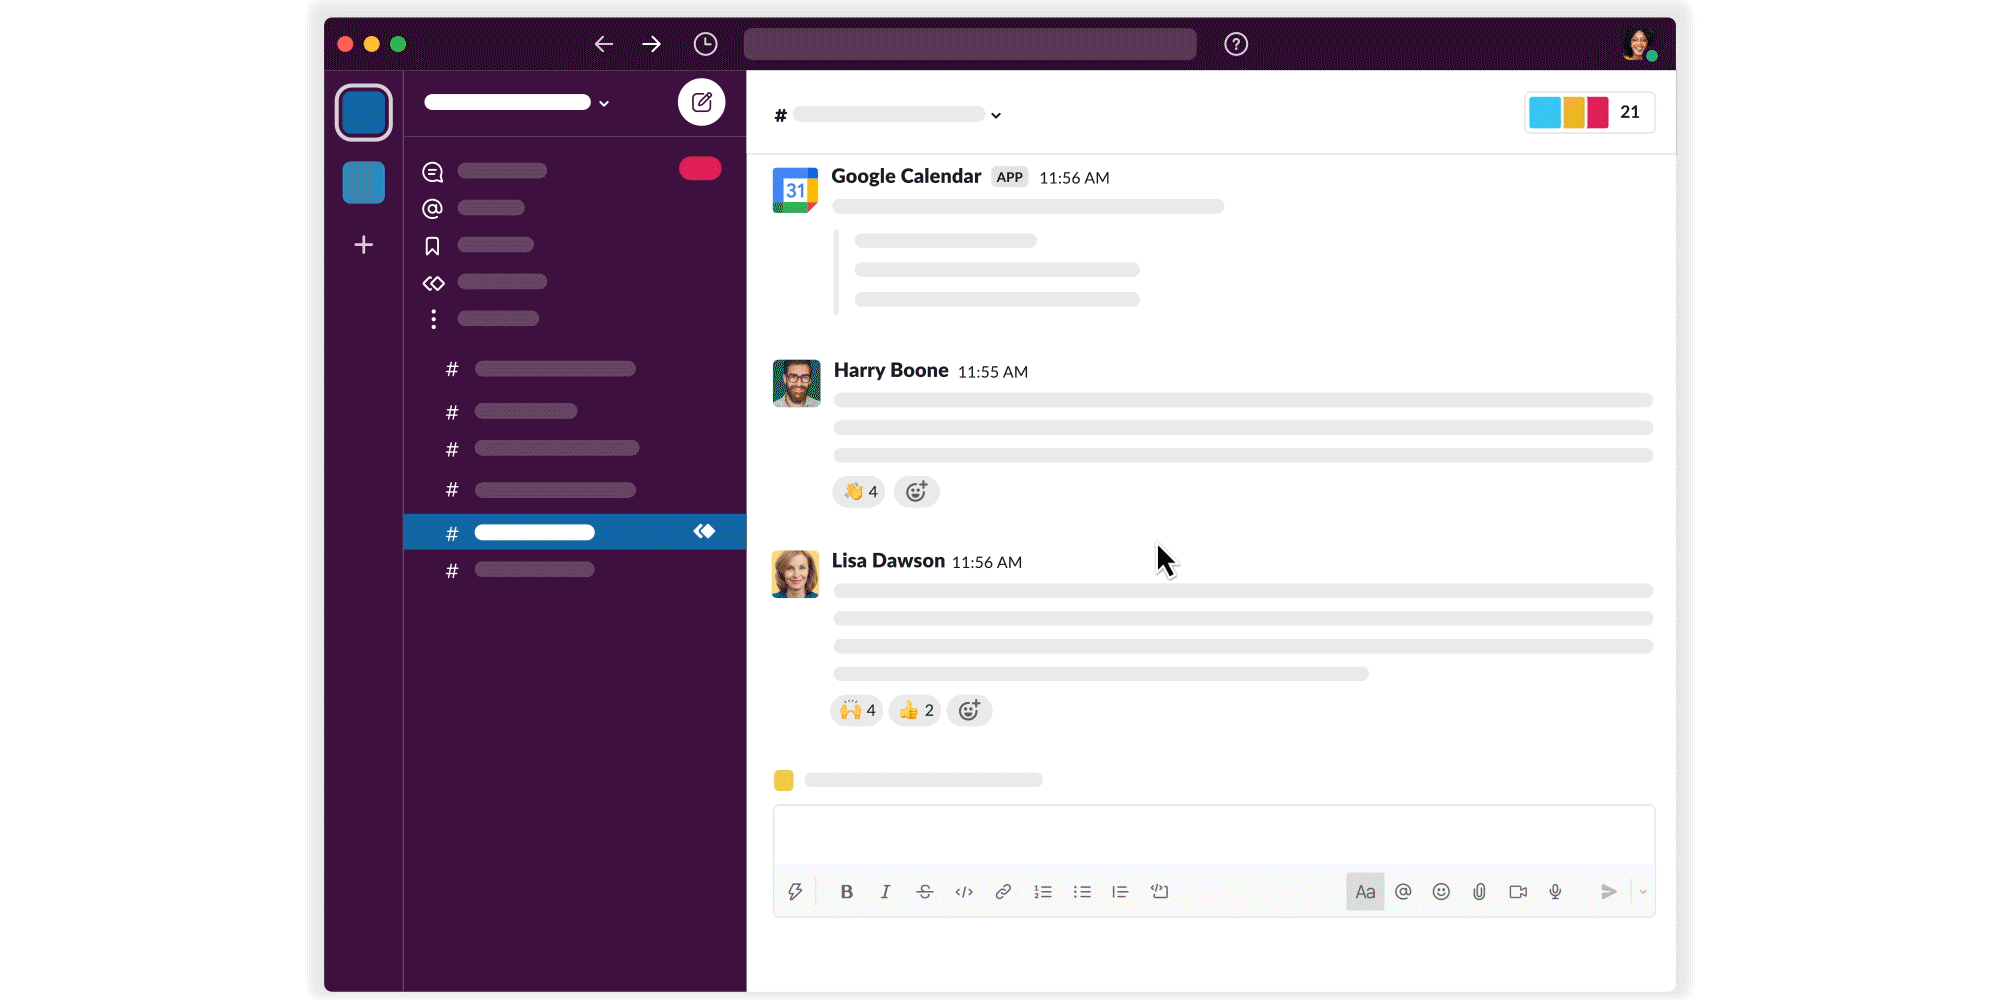 Slack 中影片剪輯的動態 GIF，GIF 中顯示有人正在共享螢幕給團隊，以分享其他網站上的工作內容